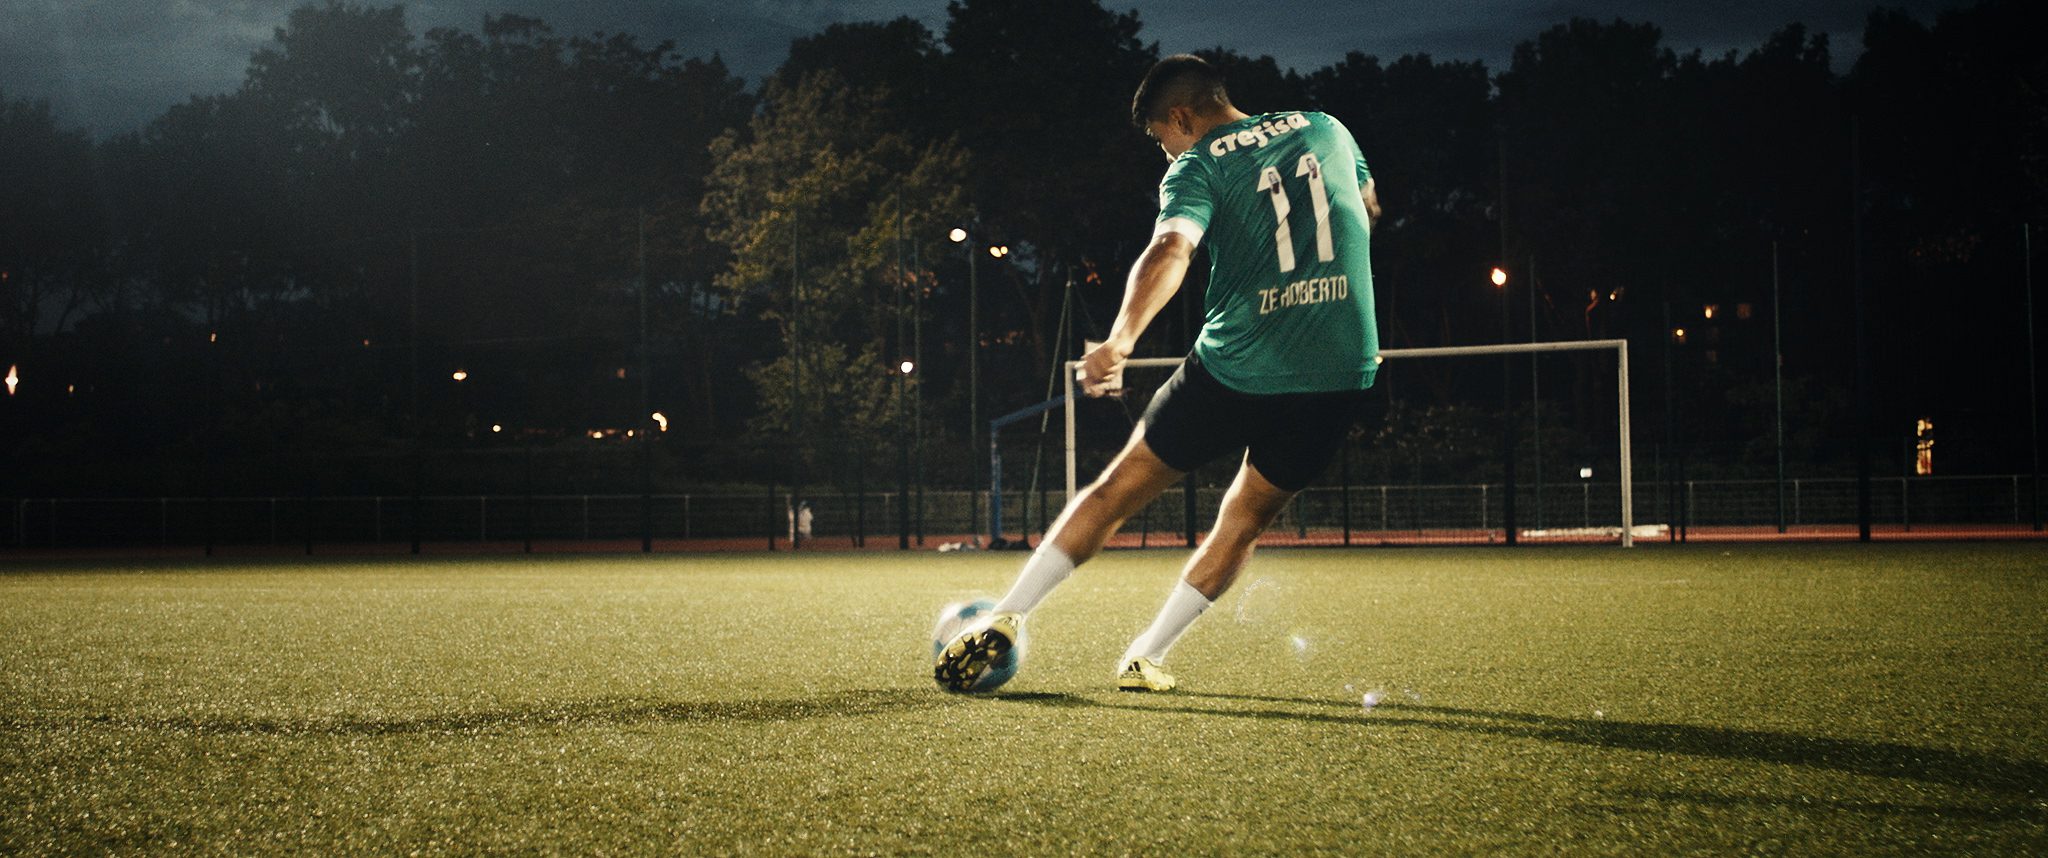 Soccer Player kicks the ball